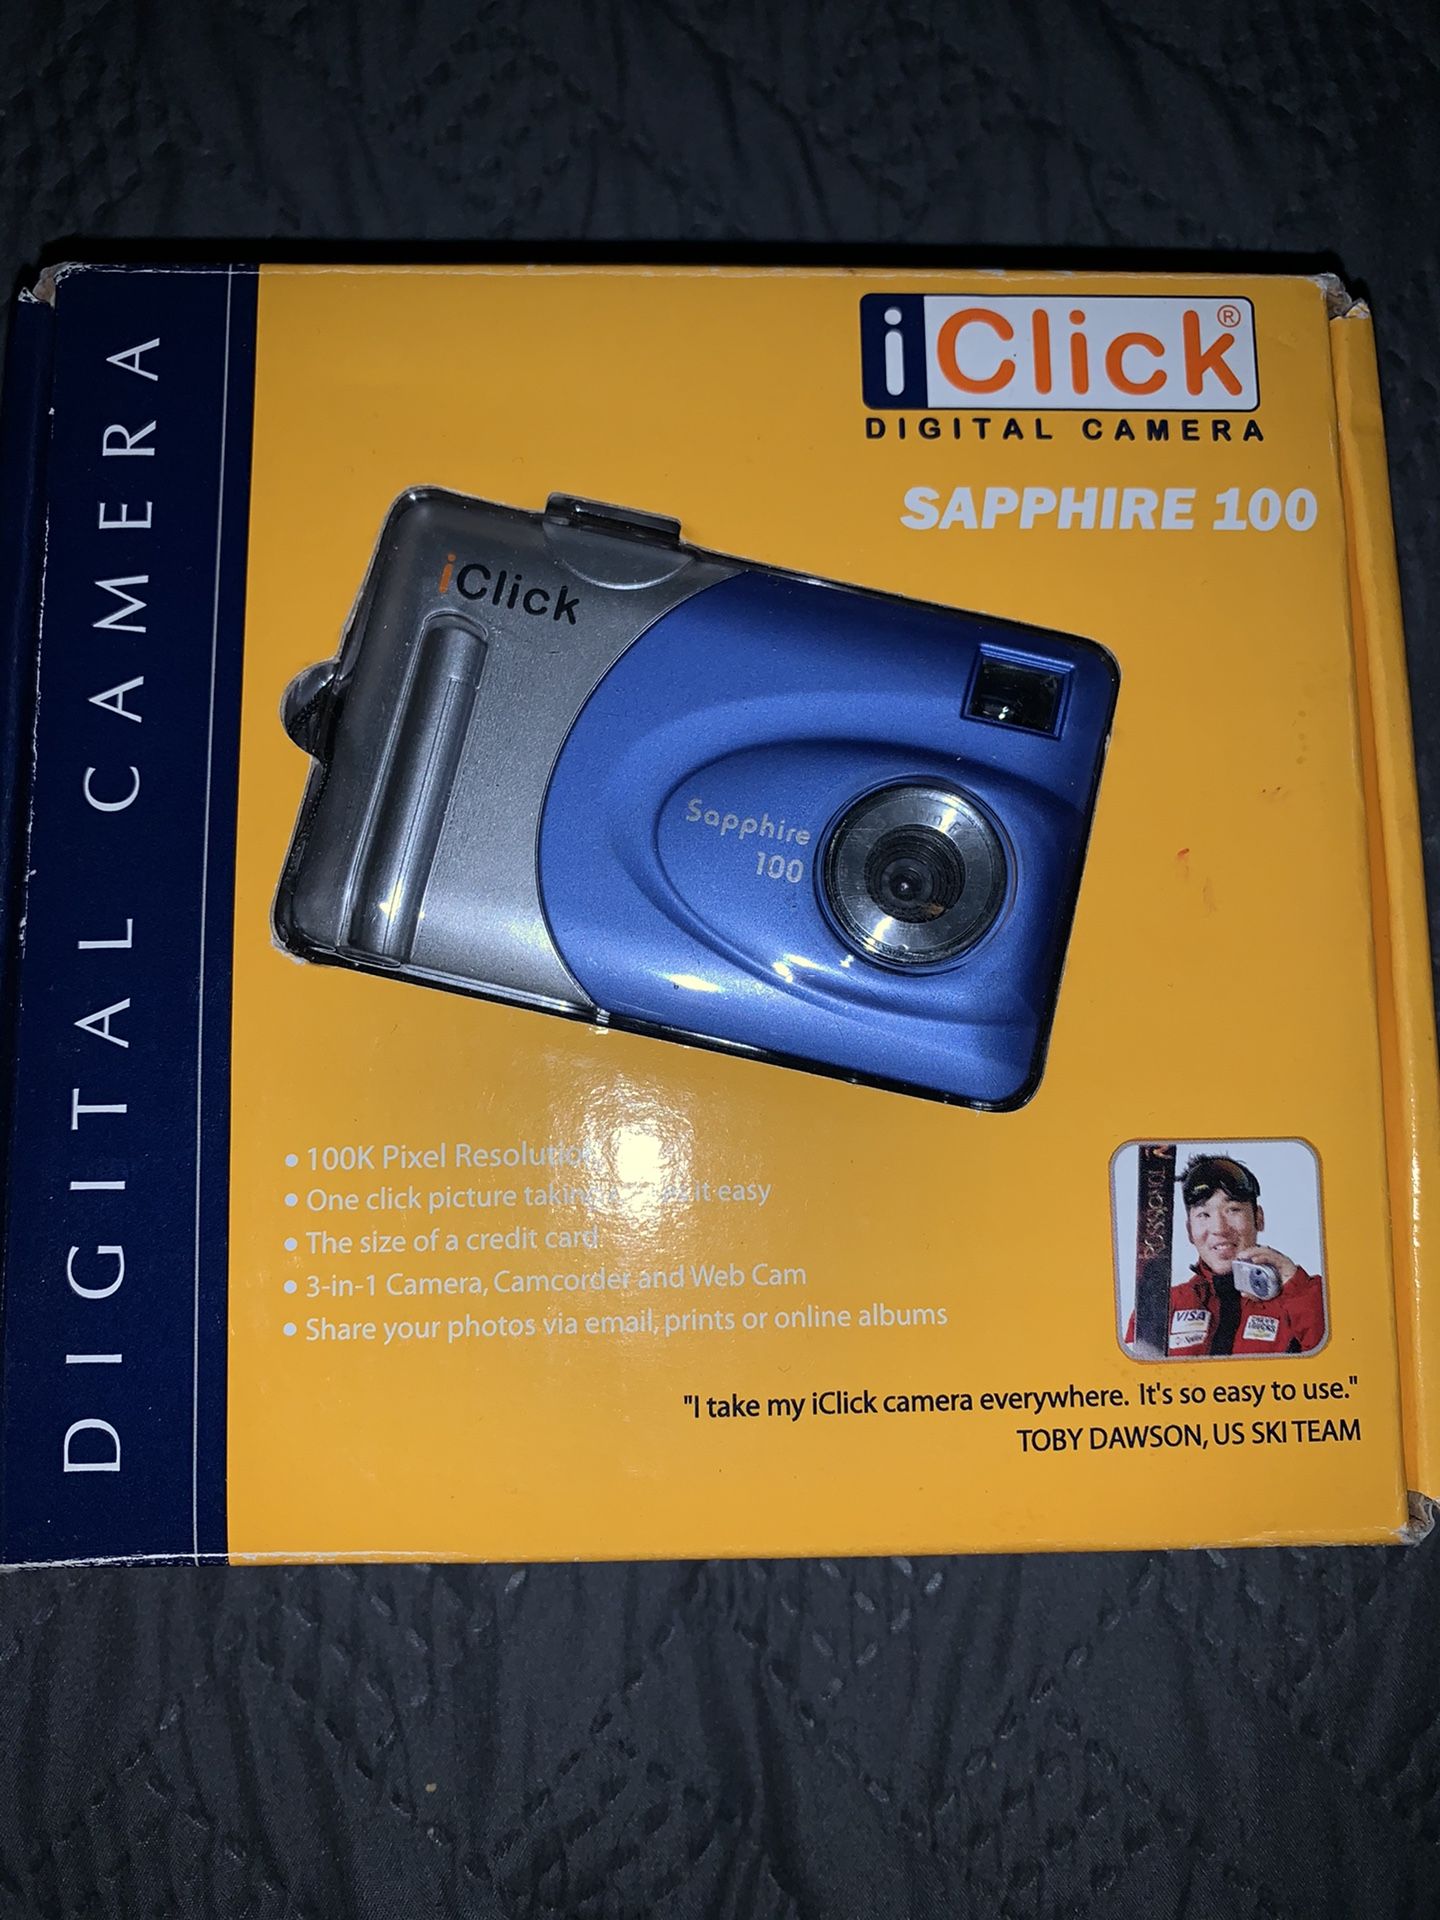 Iclick Sapphire 100 digital camera